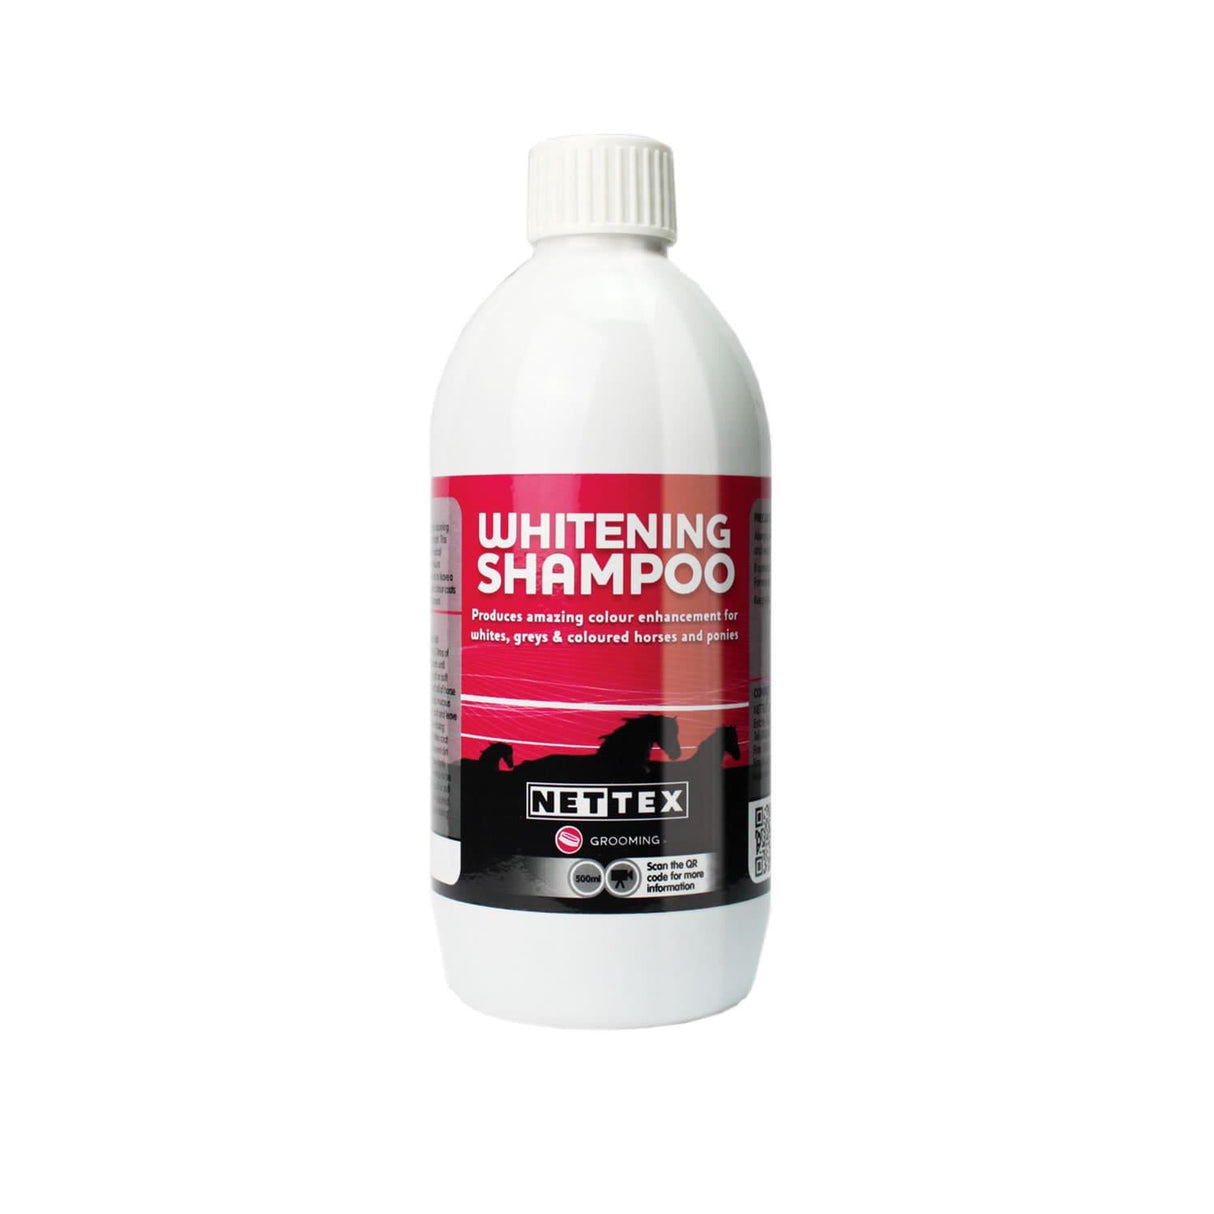 Netttex -Whitening Shampoo